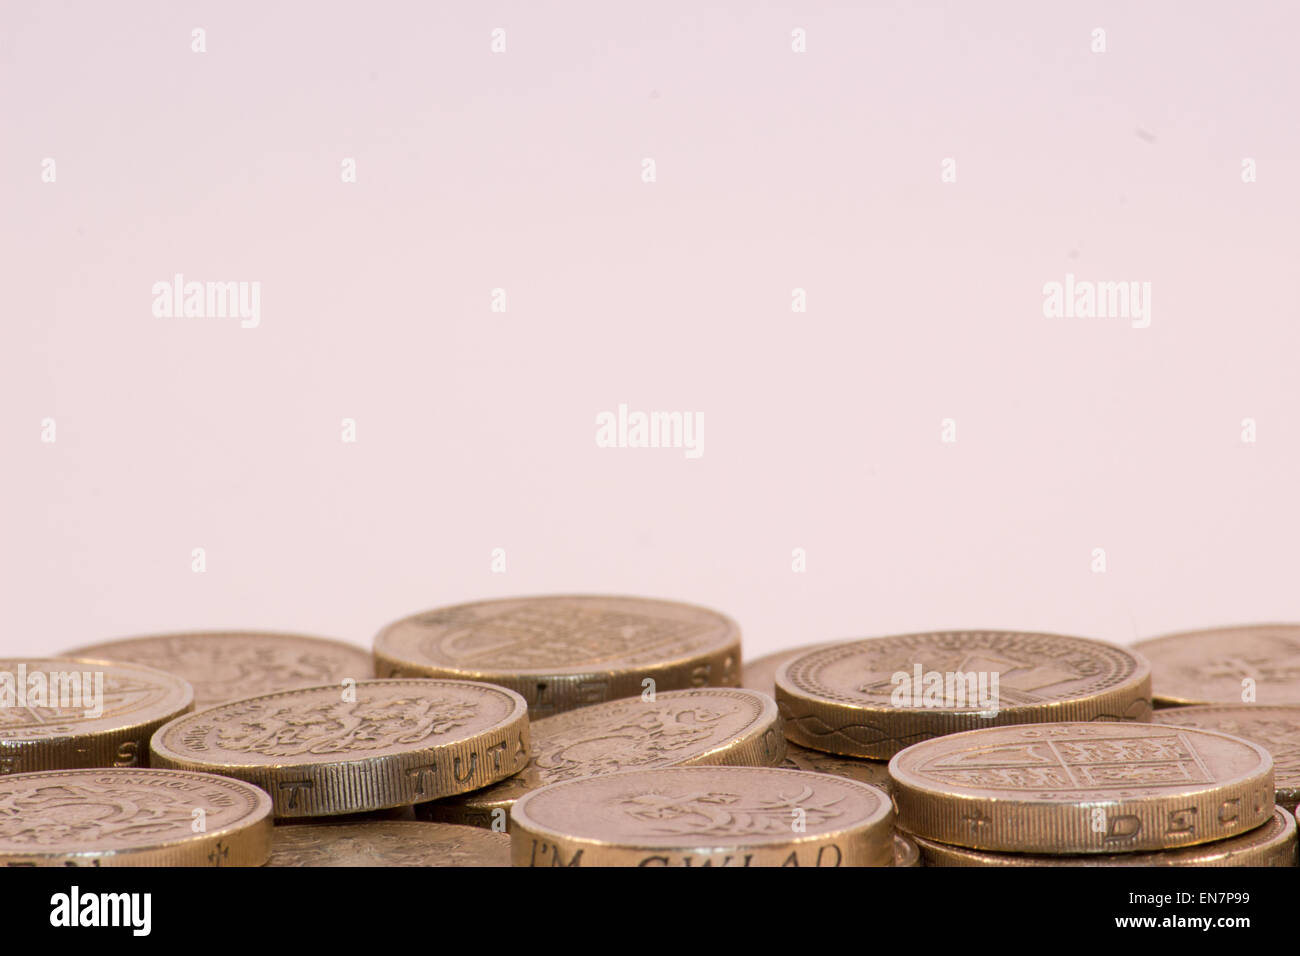 UK Pound Coins on white background Stock Photo